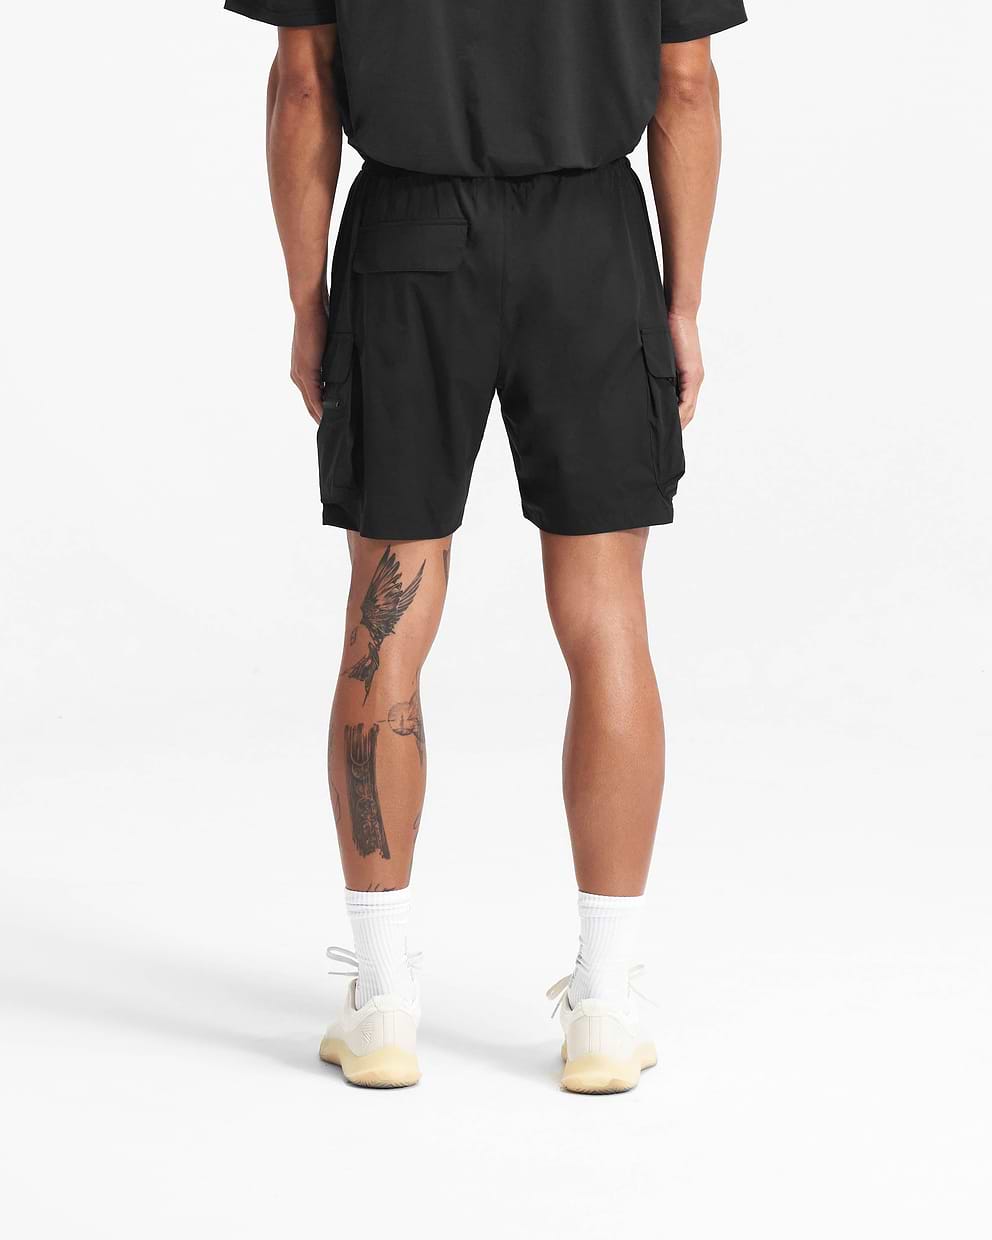 247 Shorts - Black